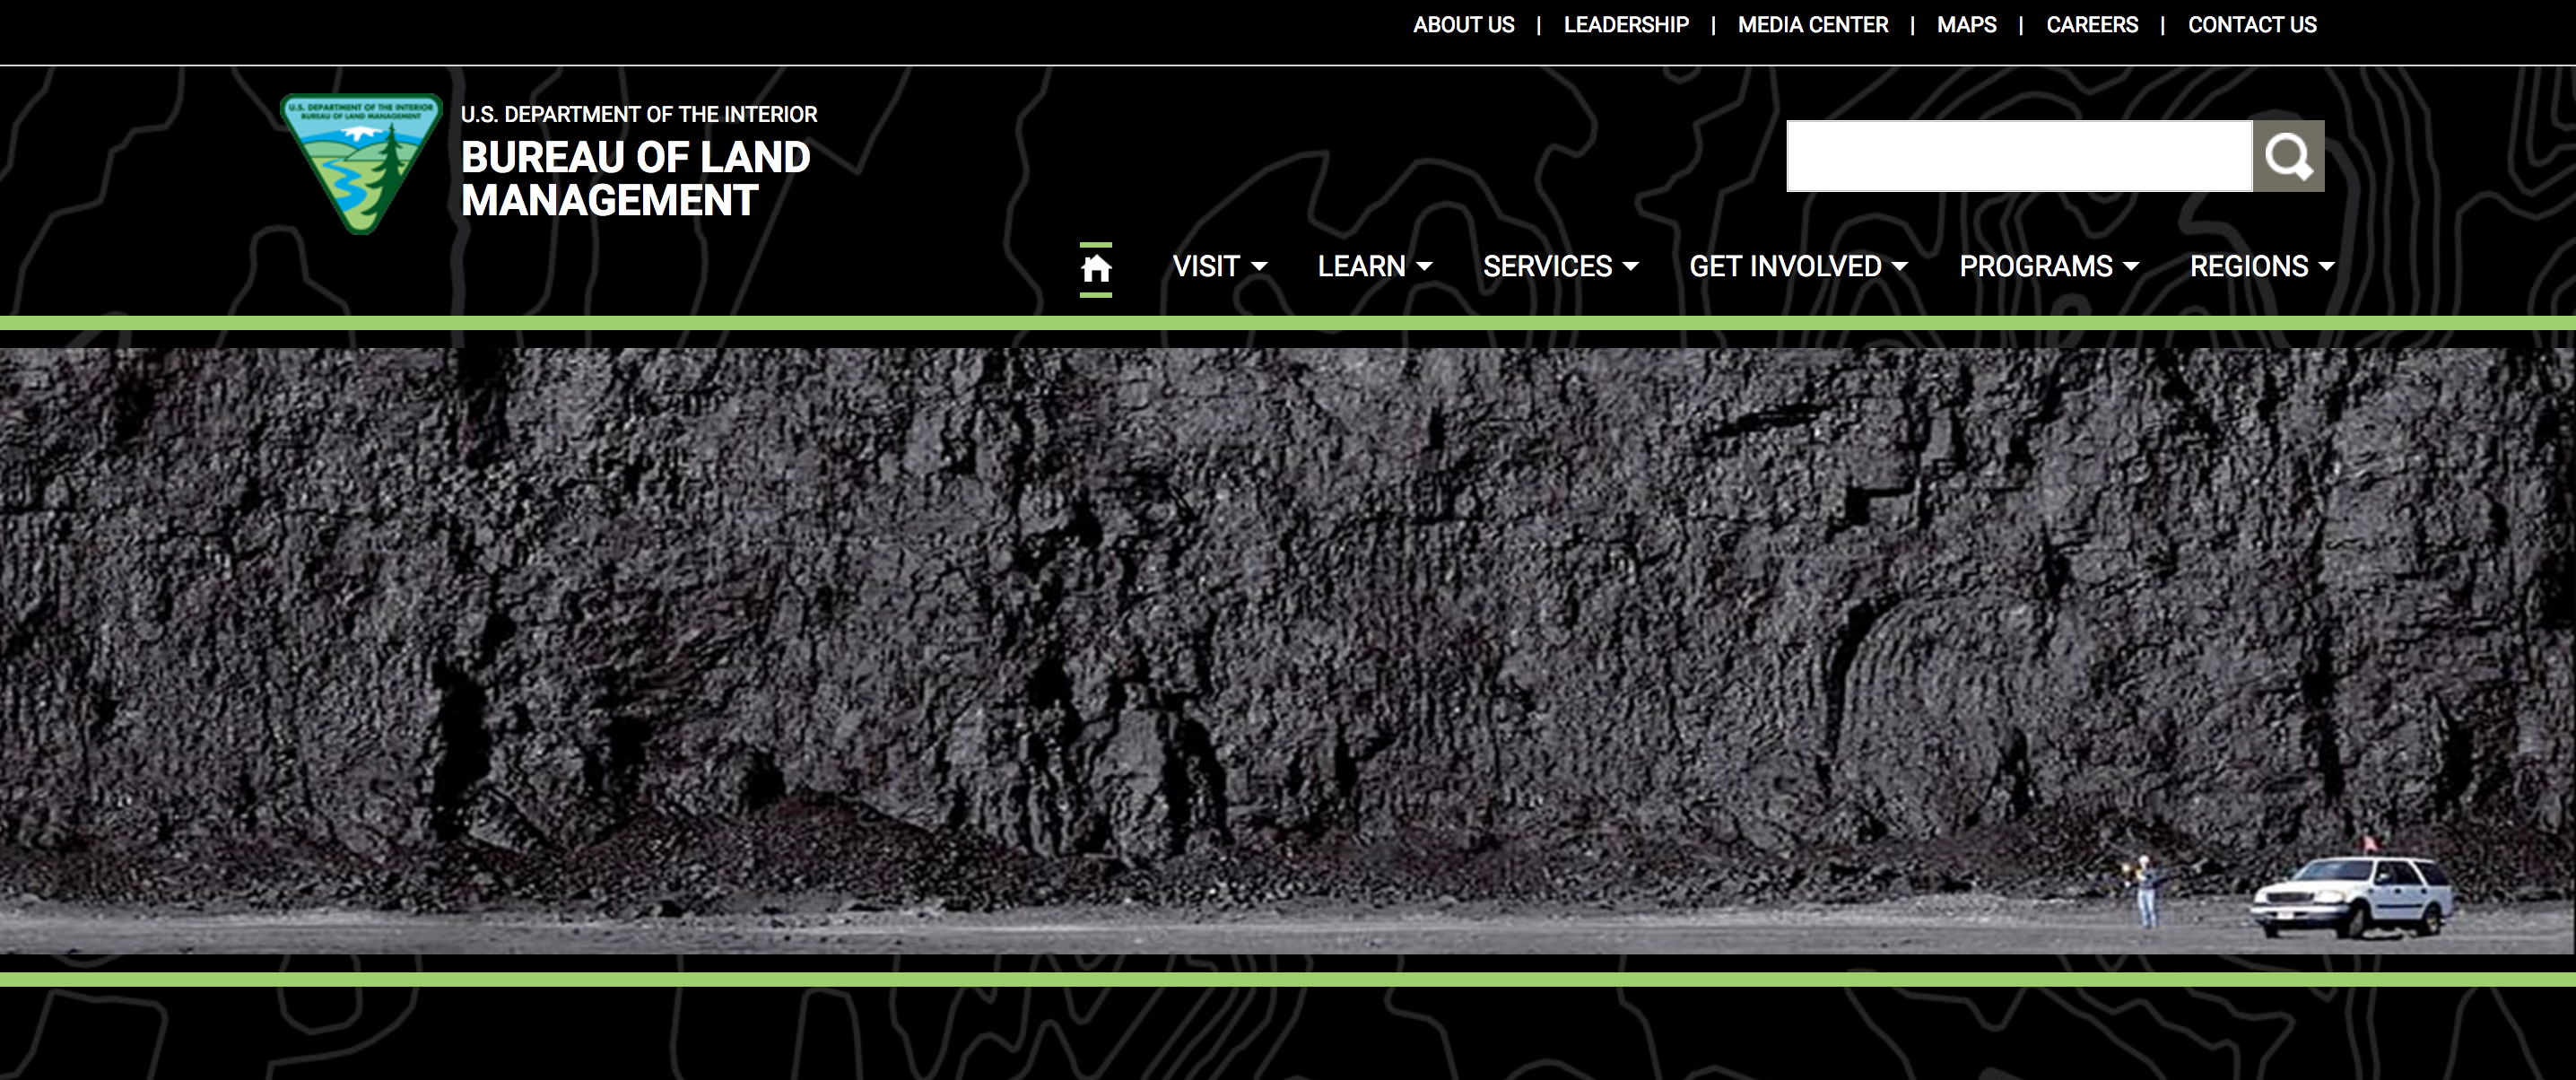 Interior Department Website Shows A Big Pile Of Coal Inverse